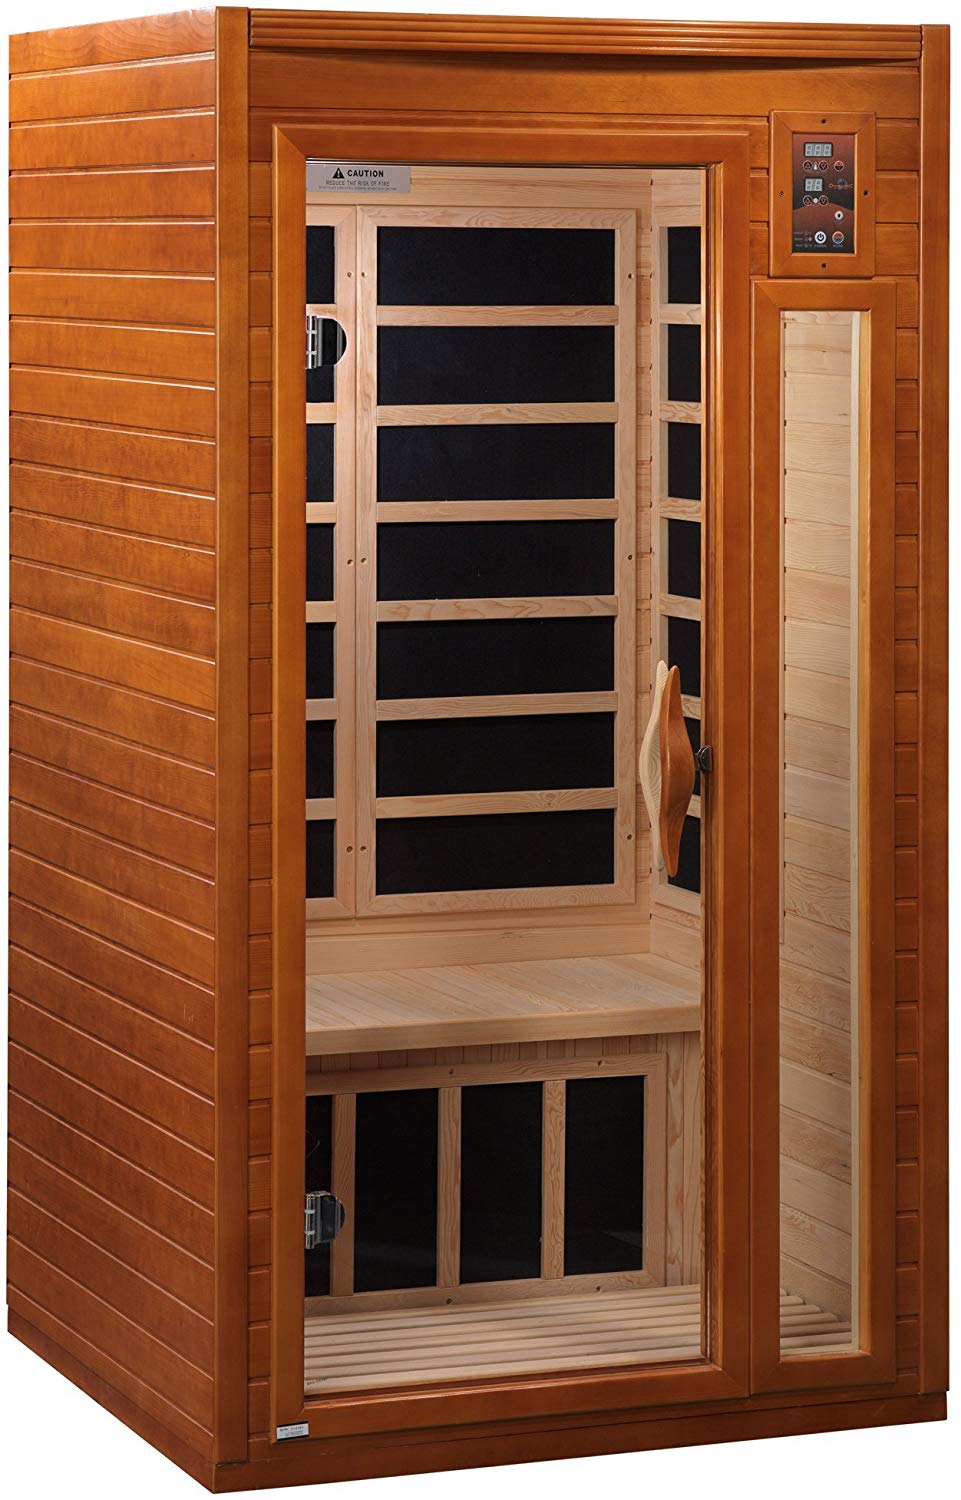 in-home infrared sauna, wooden box,, white background